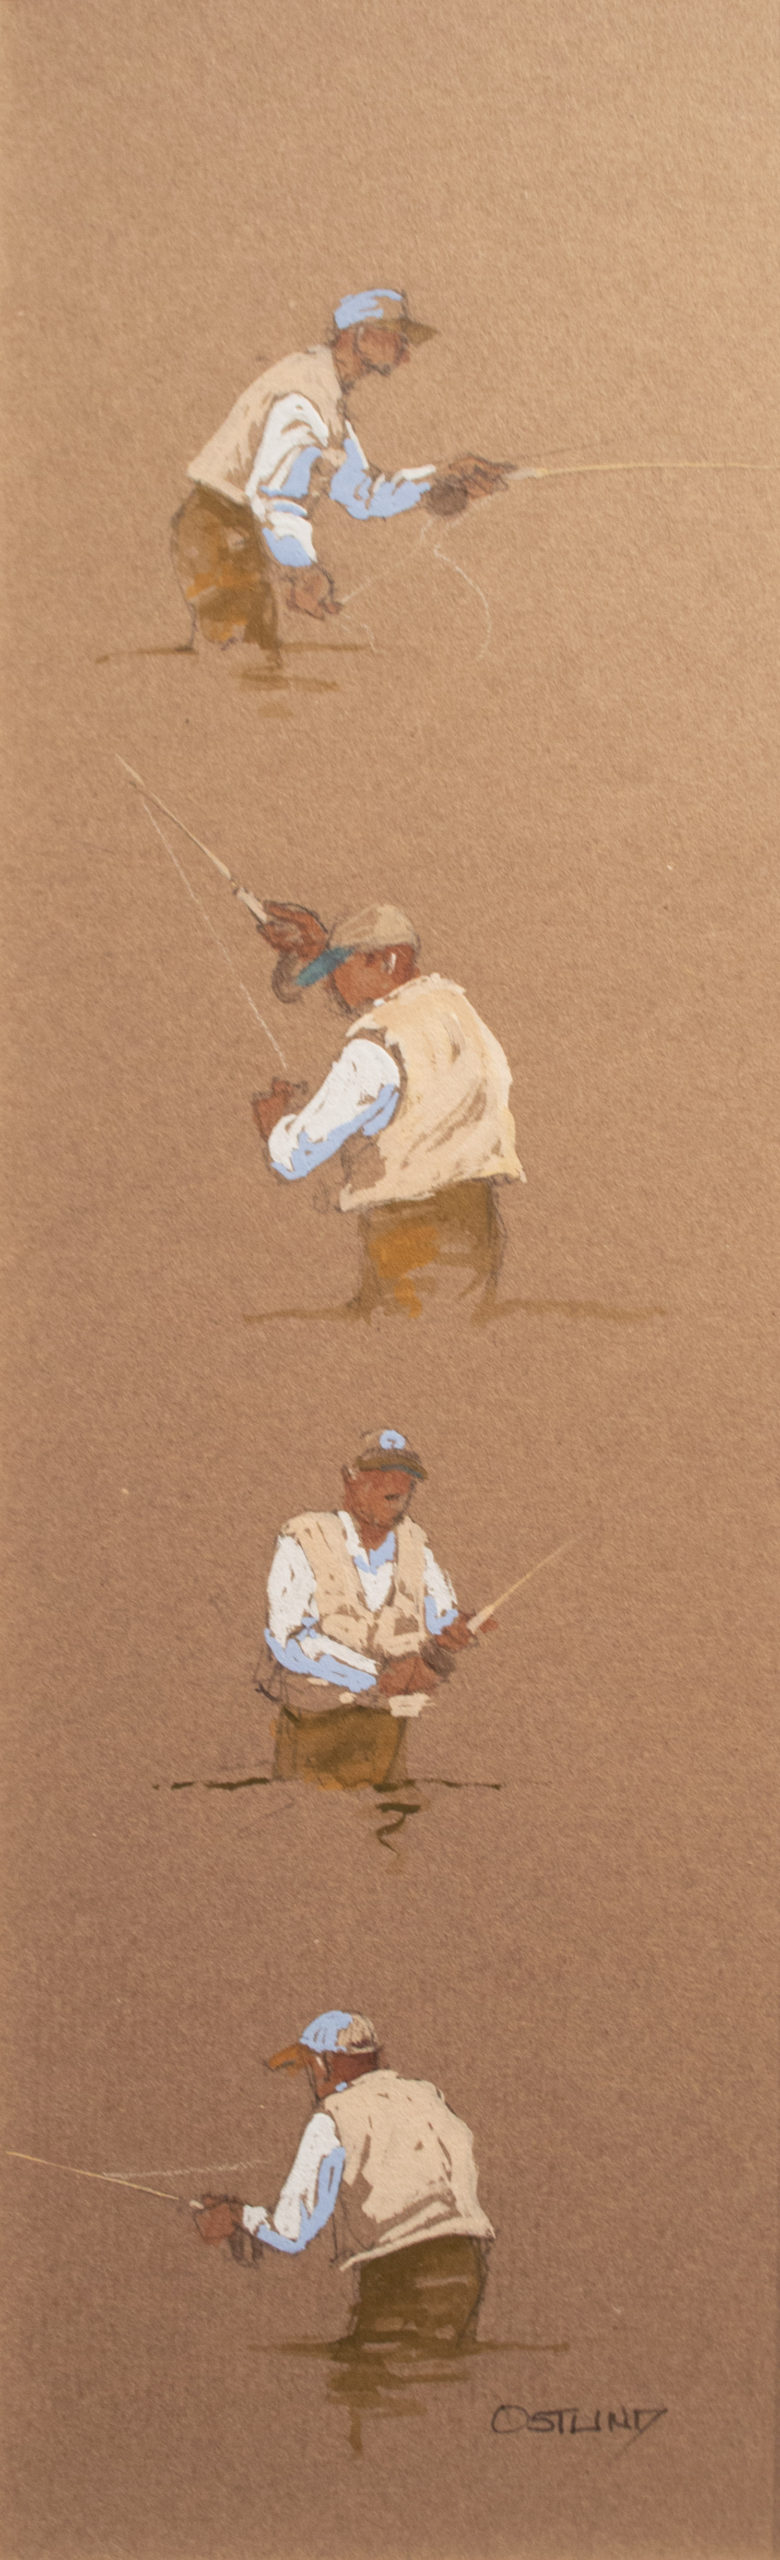 Joel  Ostlind  - Wishful Fishing